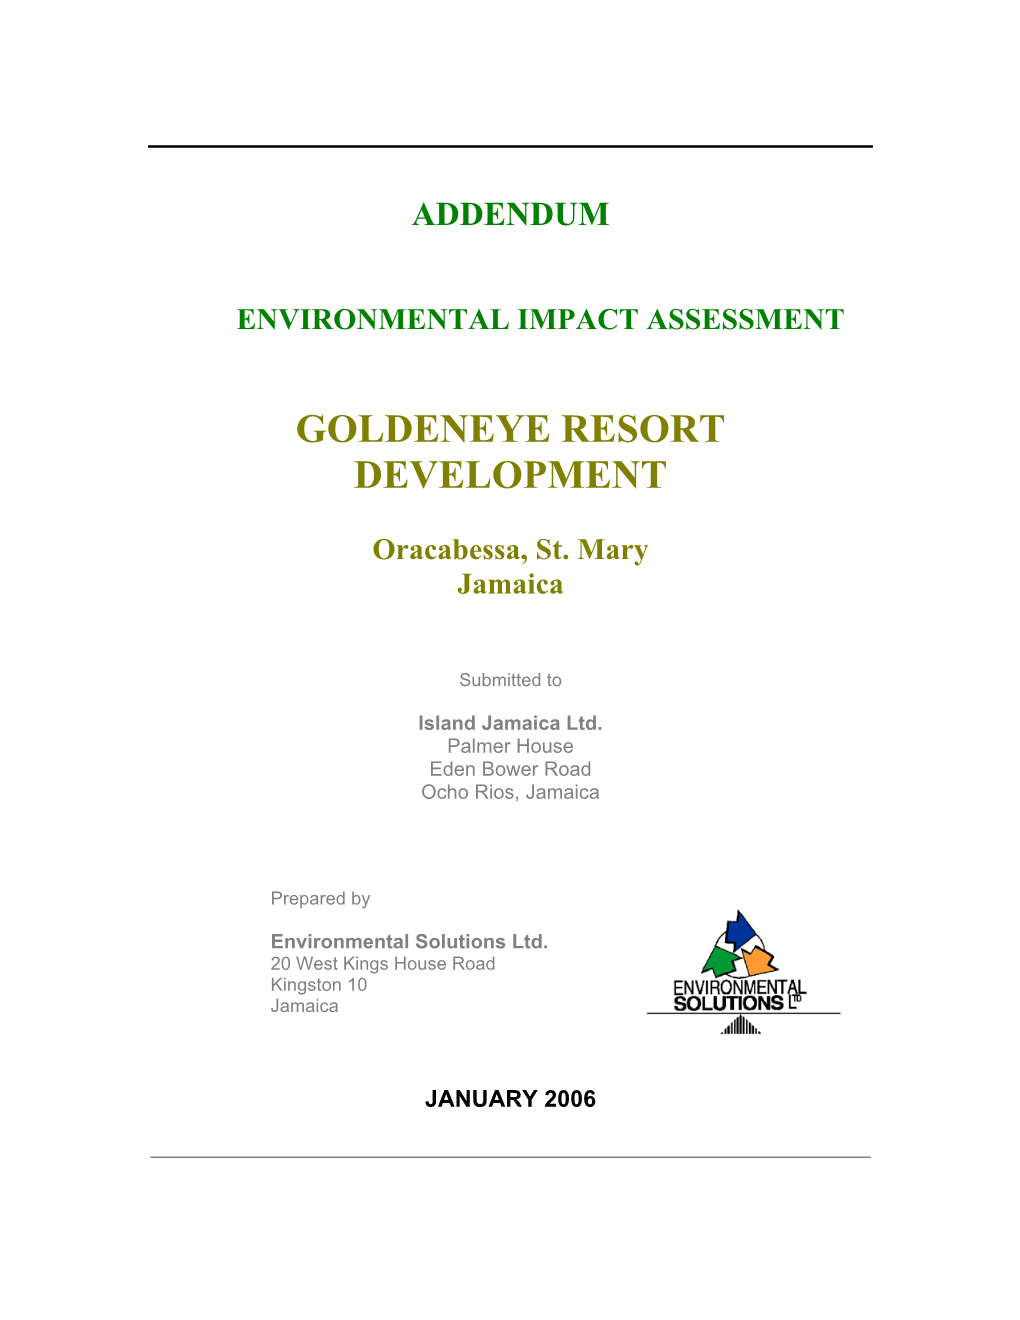 Addendum Environmental Impact Assessment